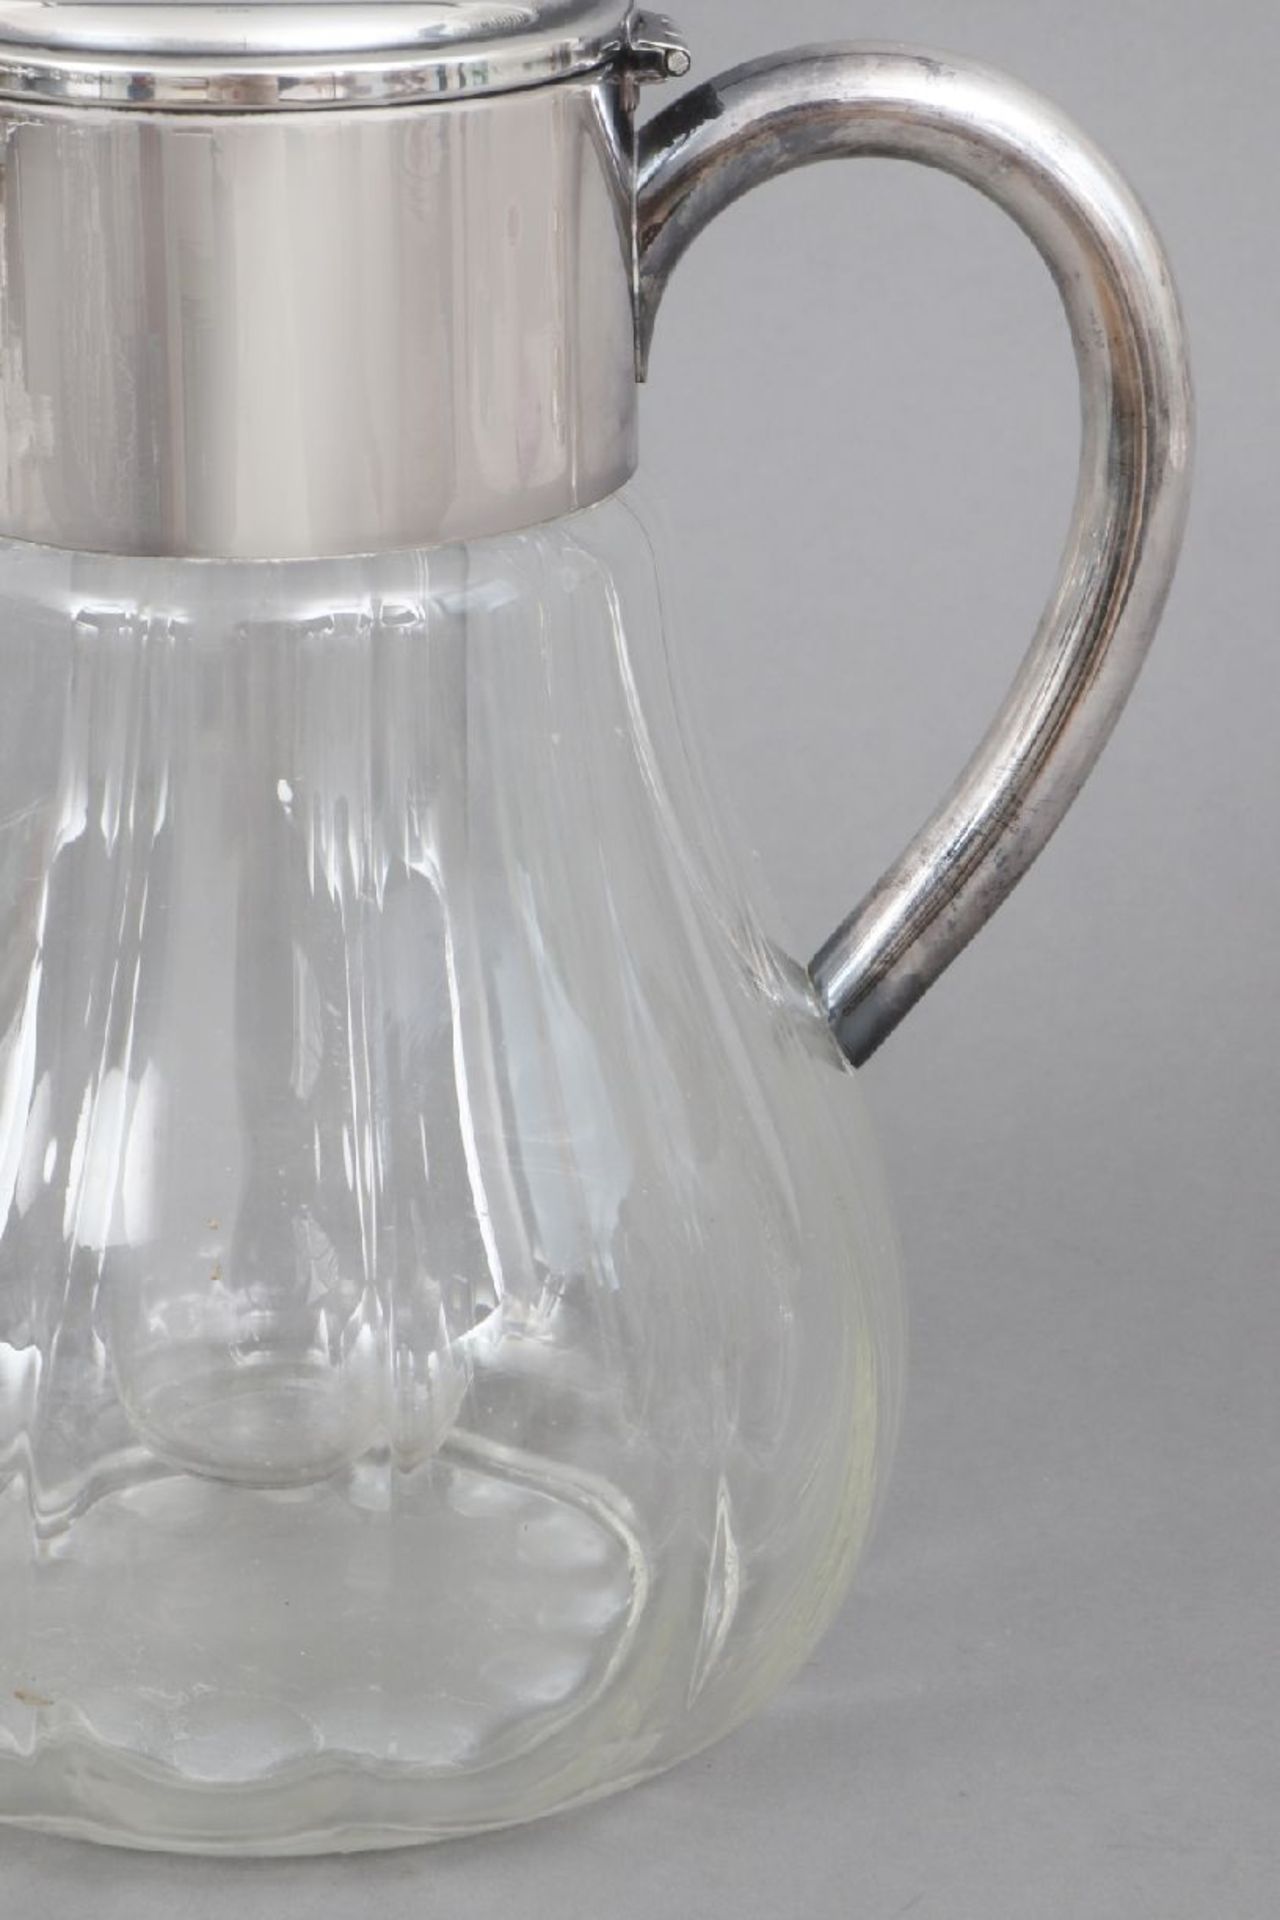 Bowlenkaraffe (¨Kalte Ente¨)Glas und versilbertes Metall, um 1930, tropfenförmiger Glas-Korpus mit - Image 3 of 3